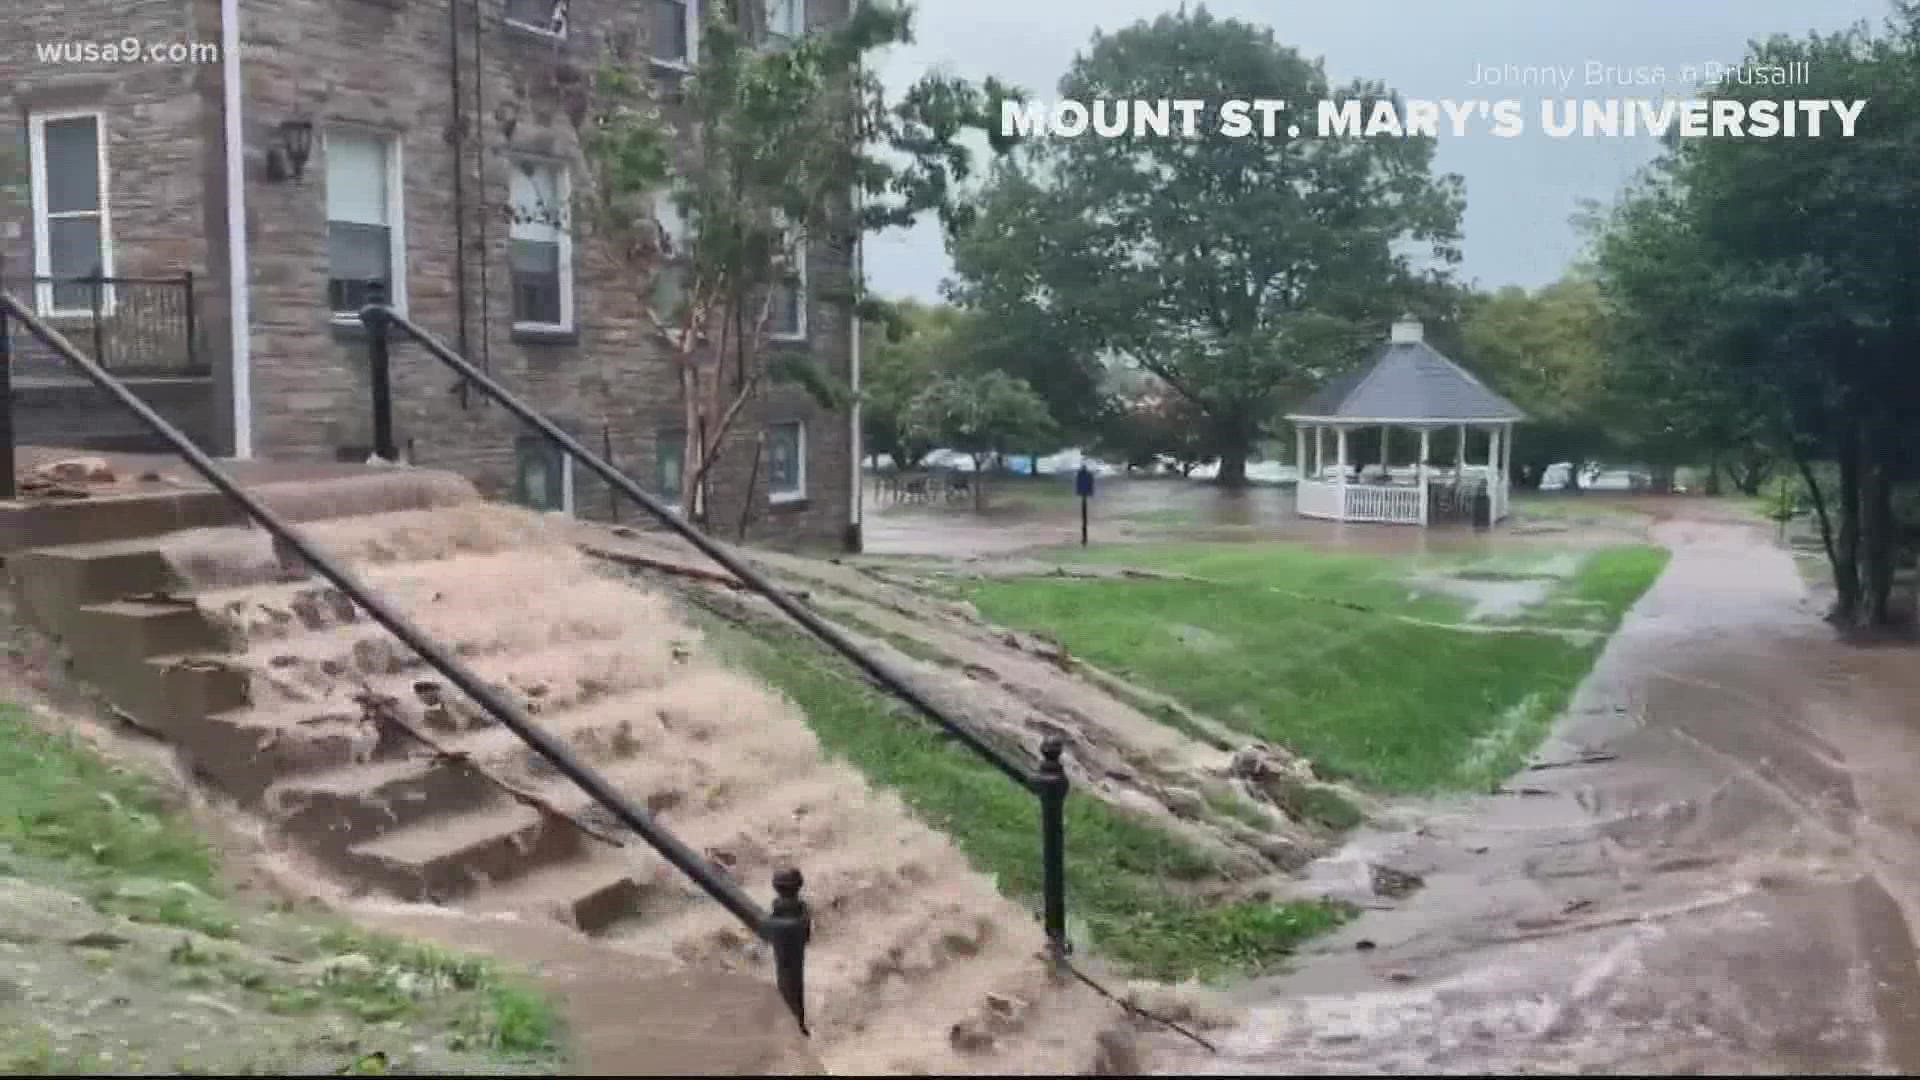 Heavy rains caused major flooding at Mount St. Mary's University.